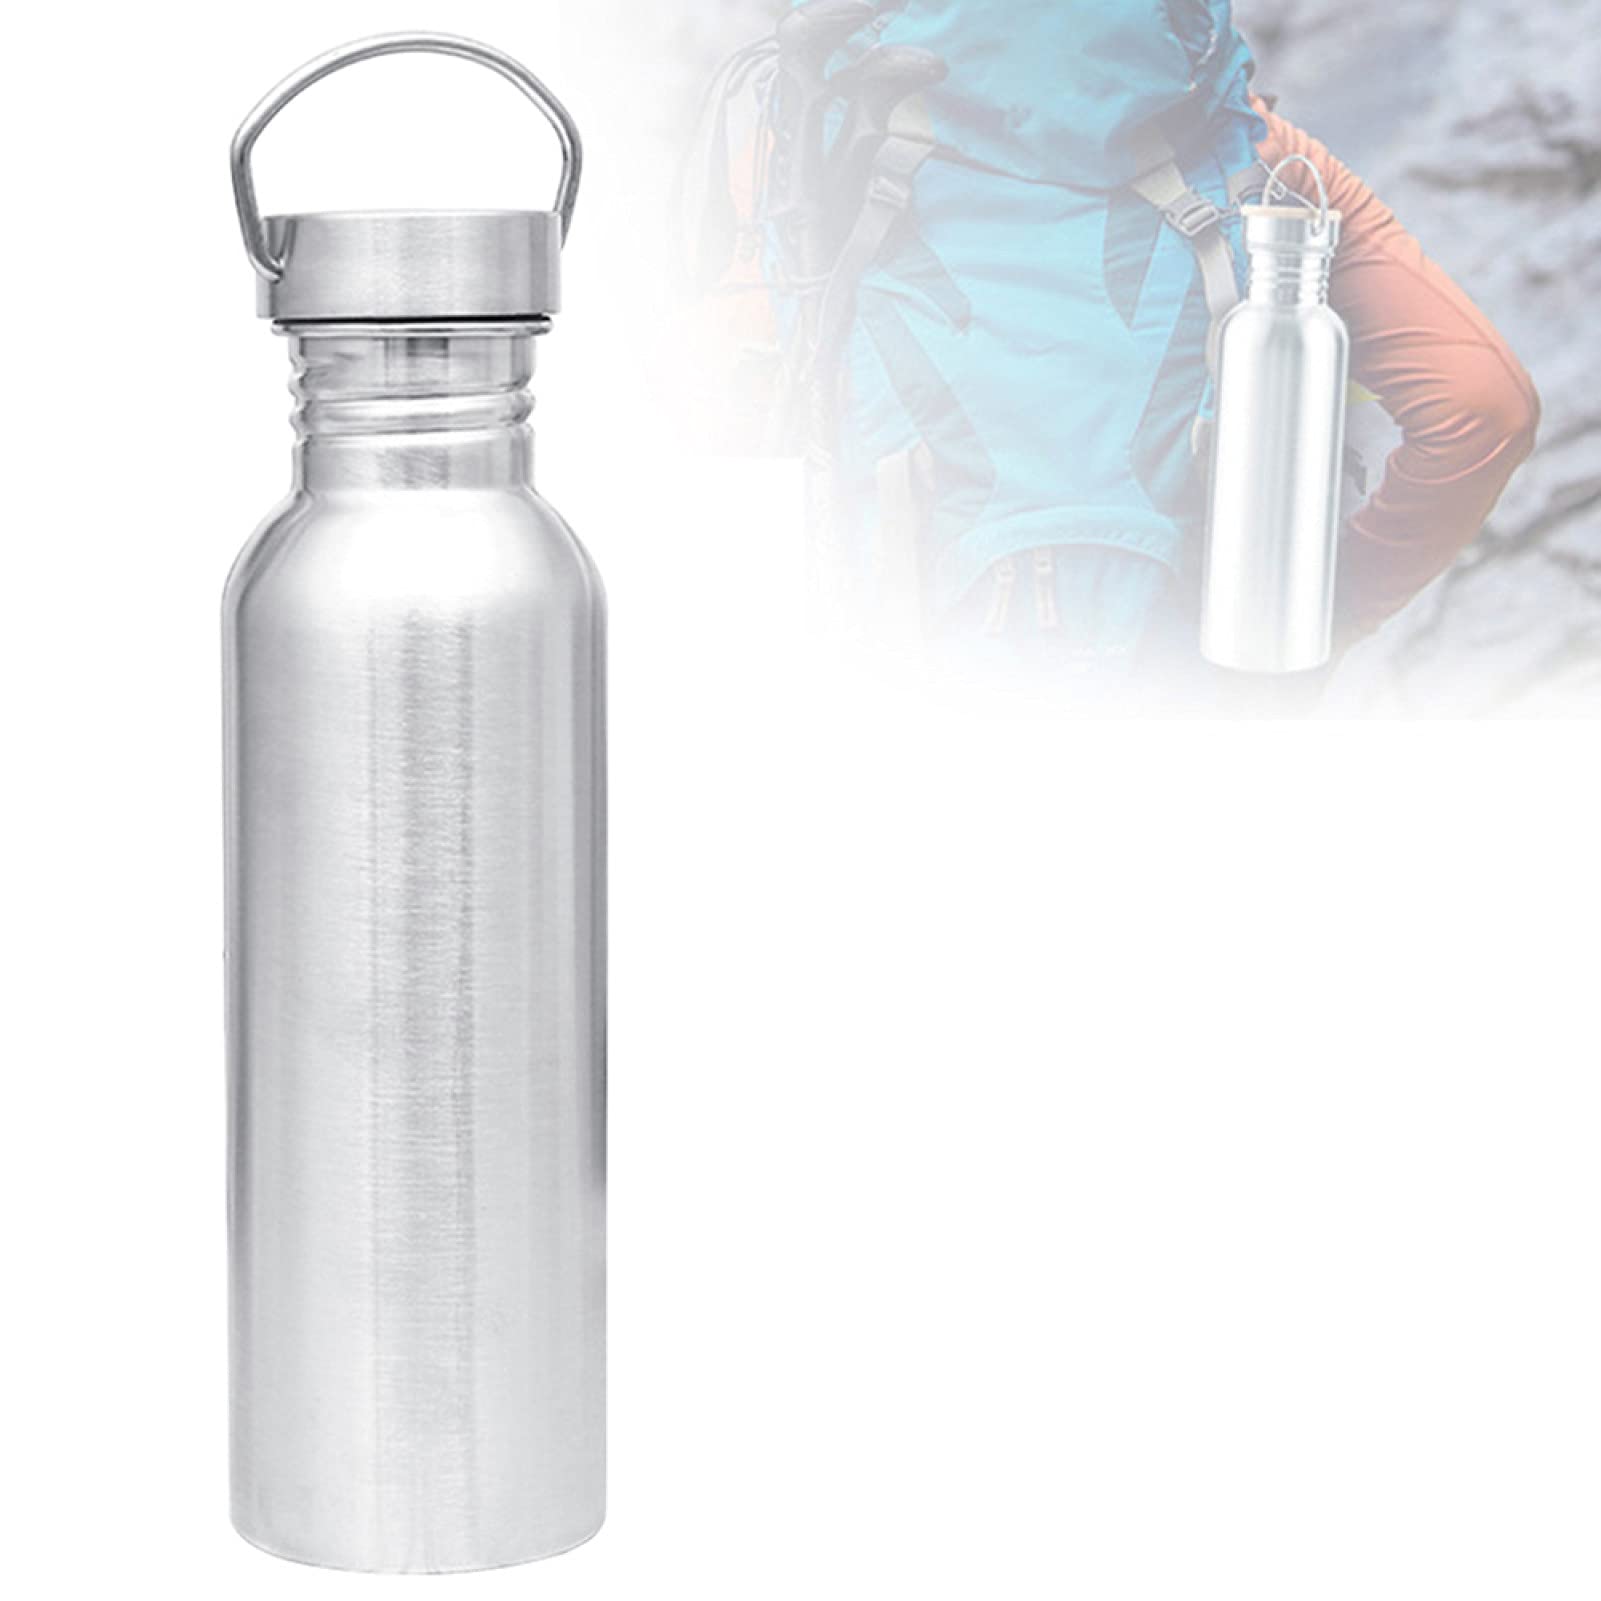 Drinking Bottles for Adults,350/500/750ml Portable Single Stainless Steel Travel Jug Water Bottle Kettle - Silver 750ml